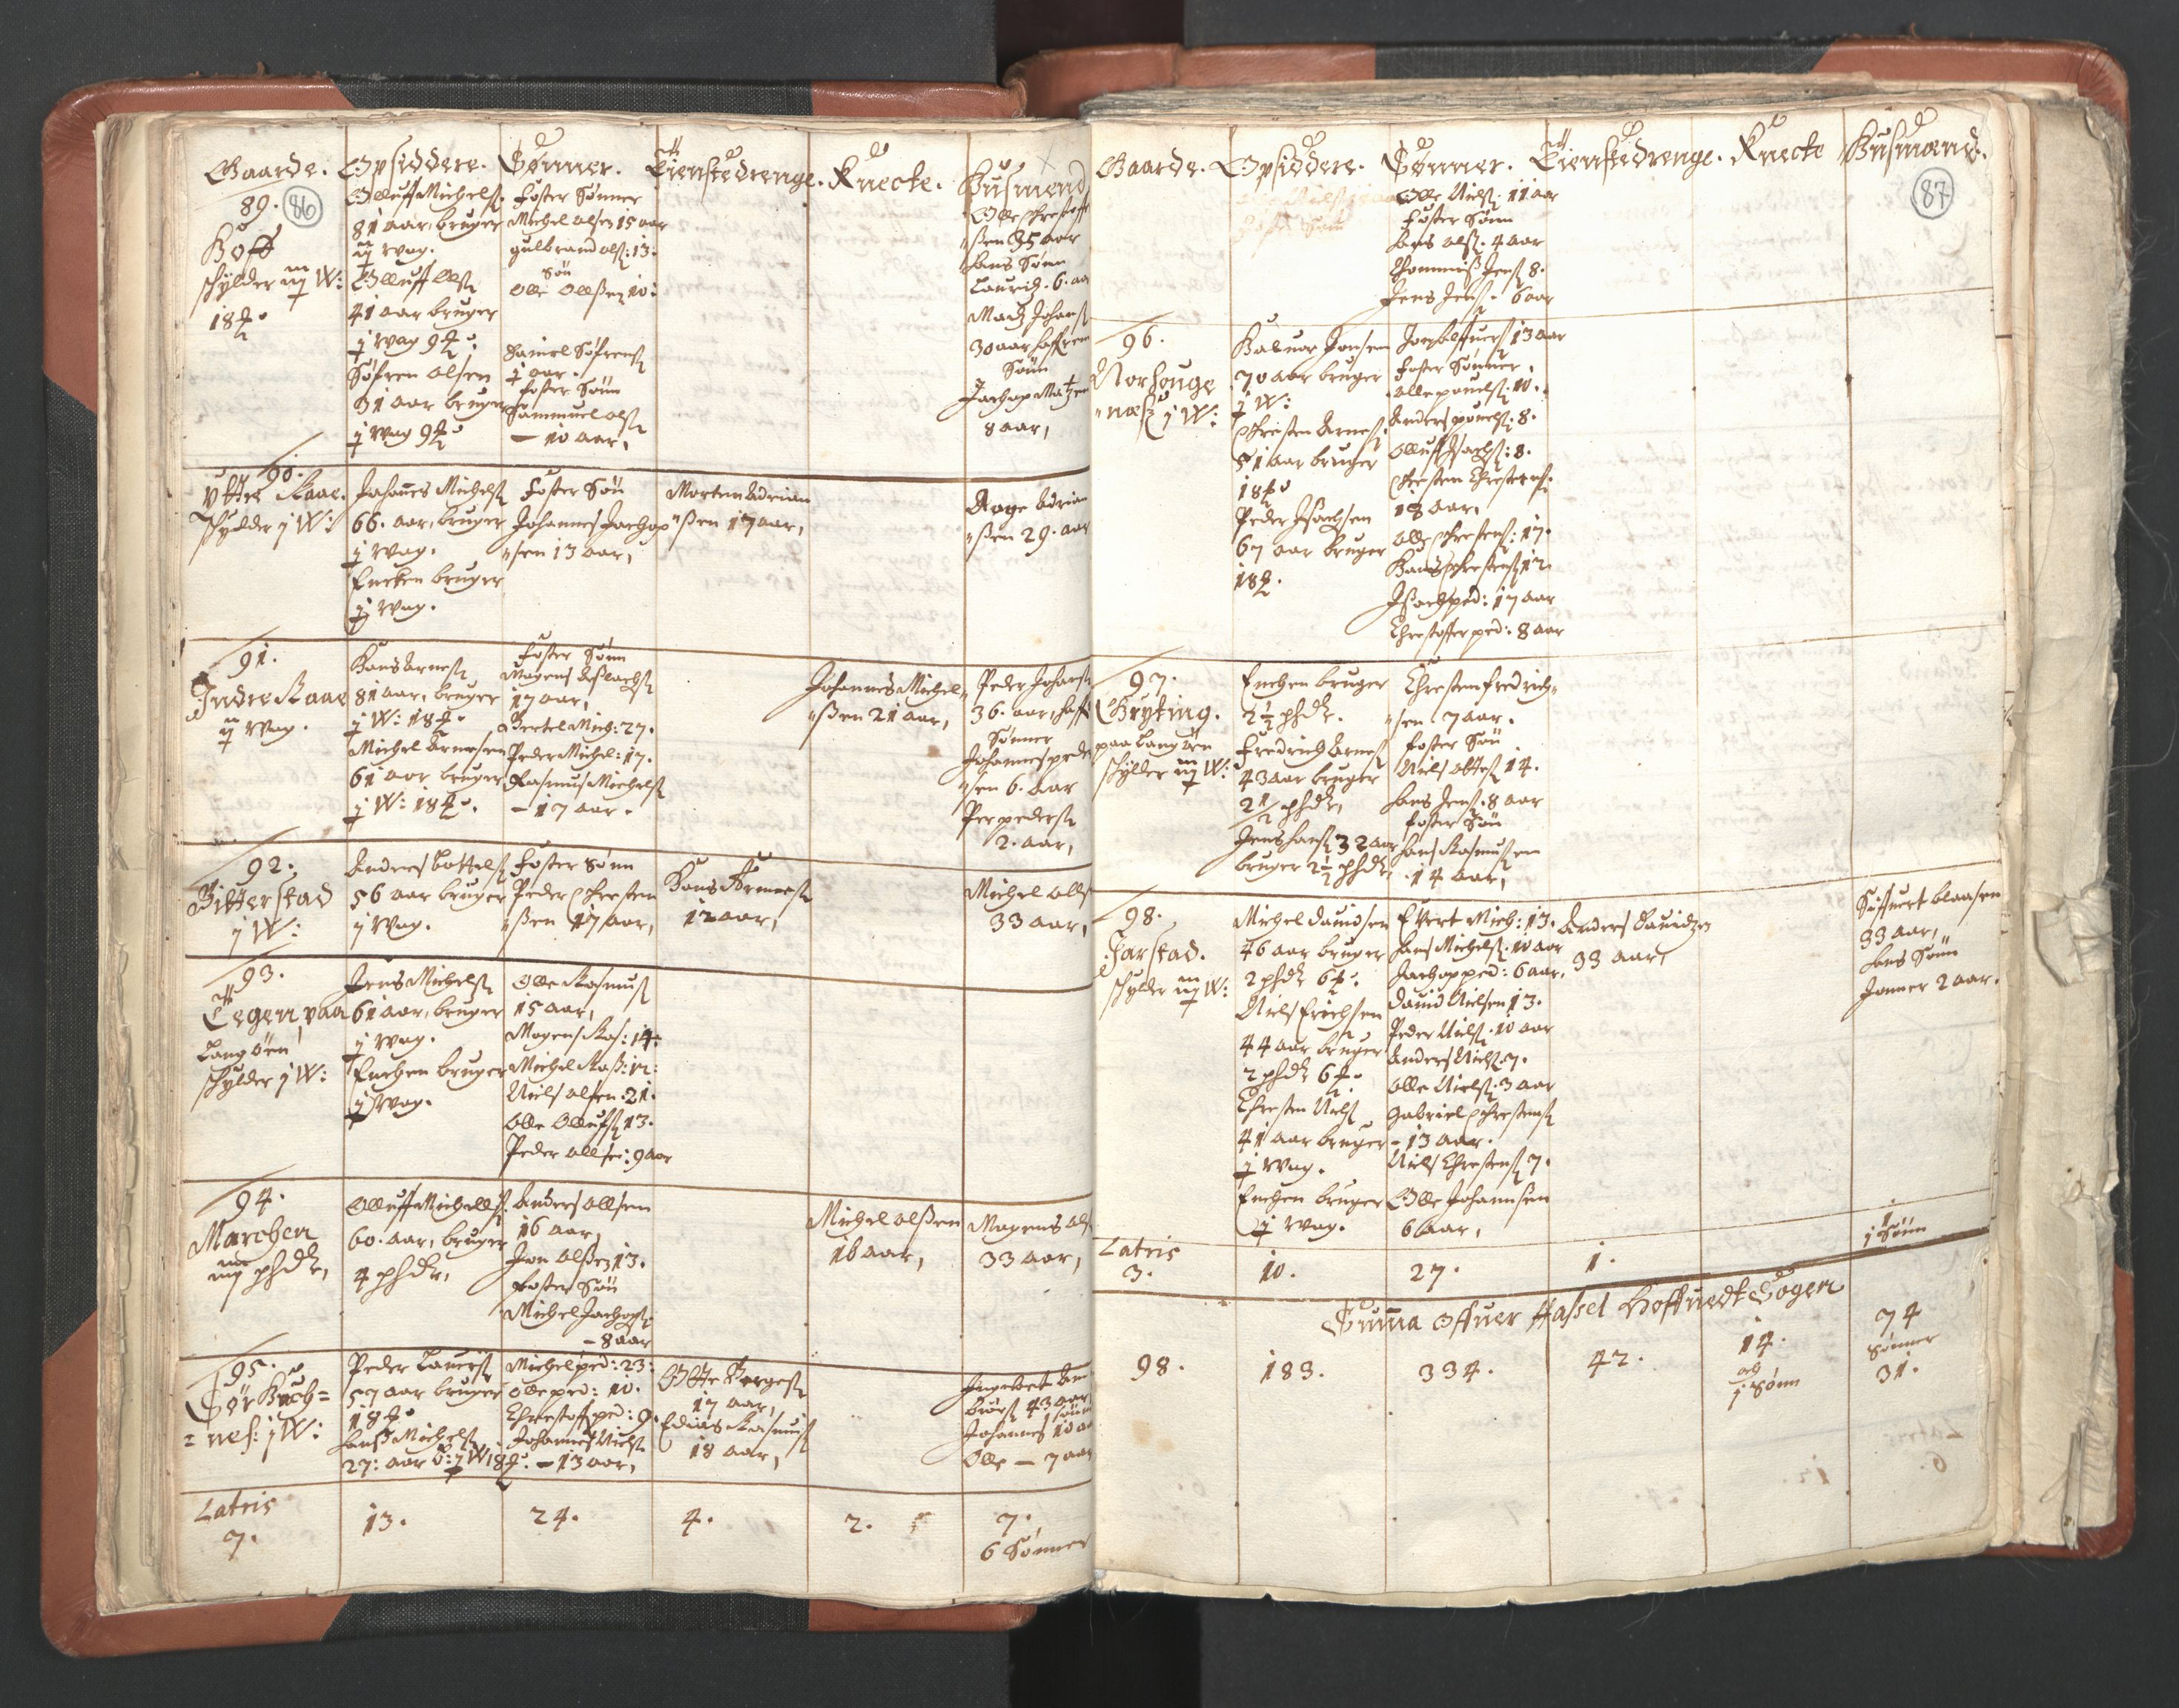 RA, Vicar's Census 1664-1666, no. 36: Lofoten and Vesterålen deanery, Senja deanery and Troms deanery, 1664-1666, p. 86-87